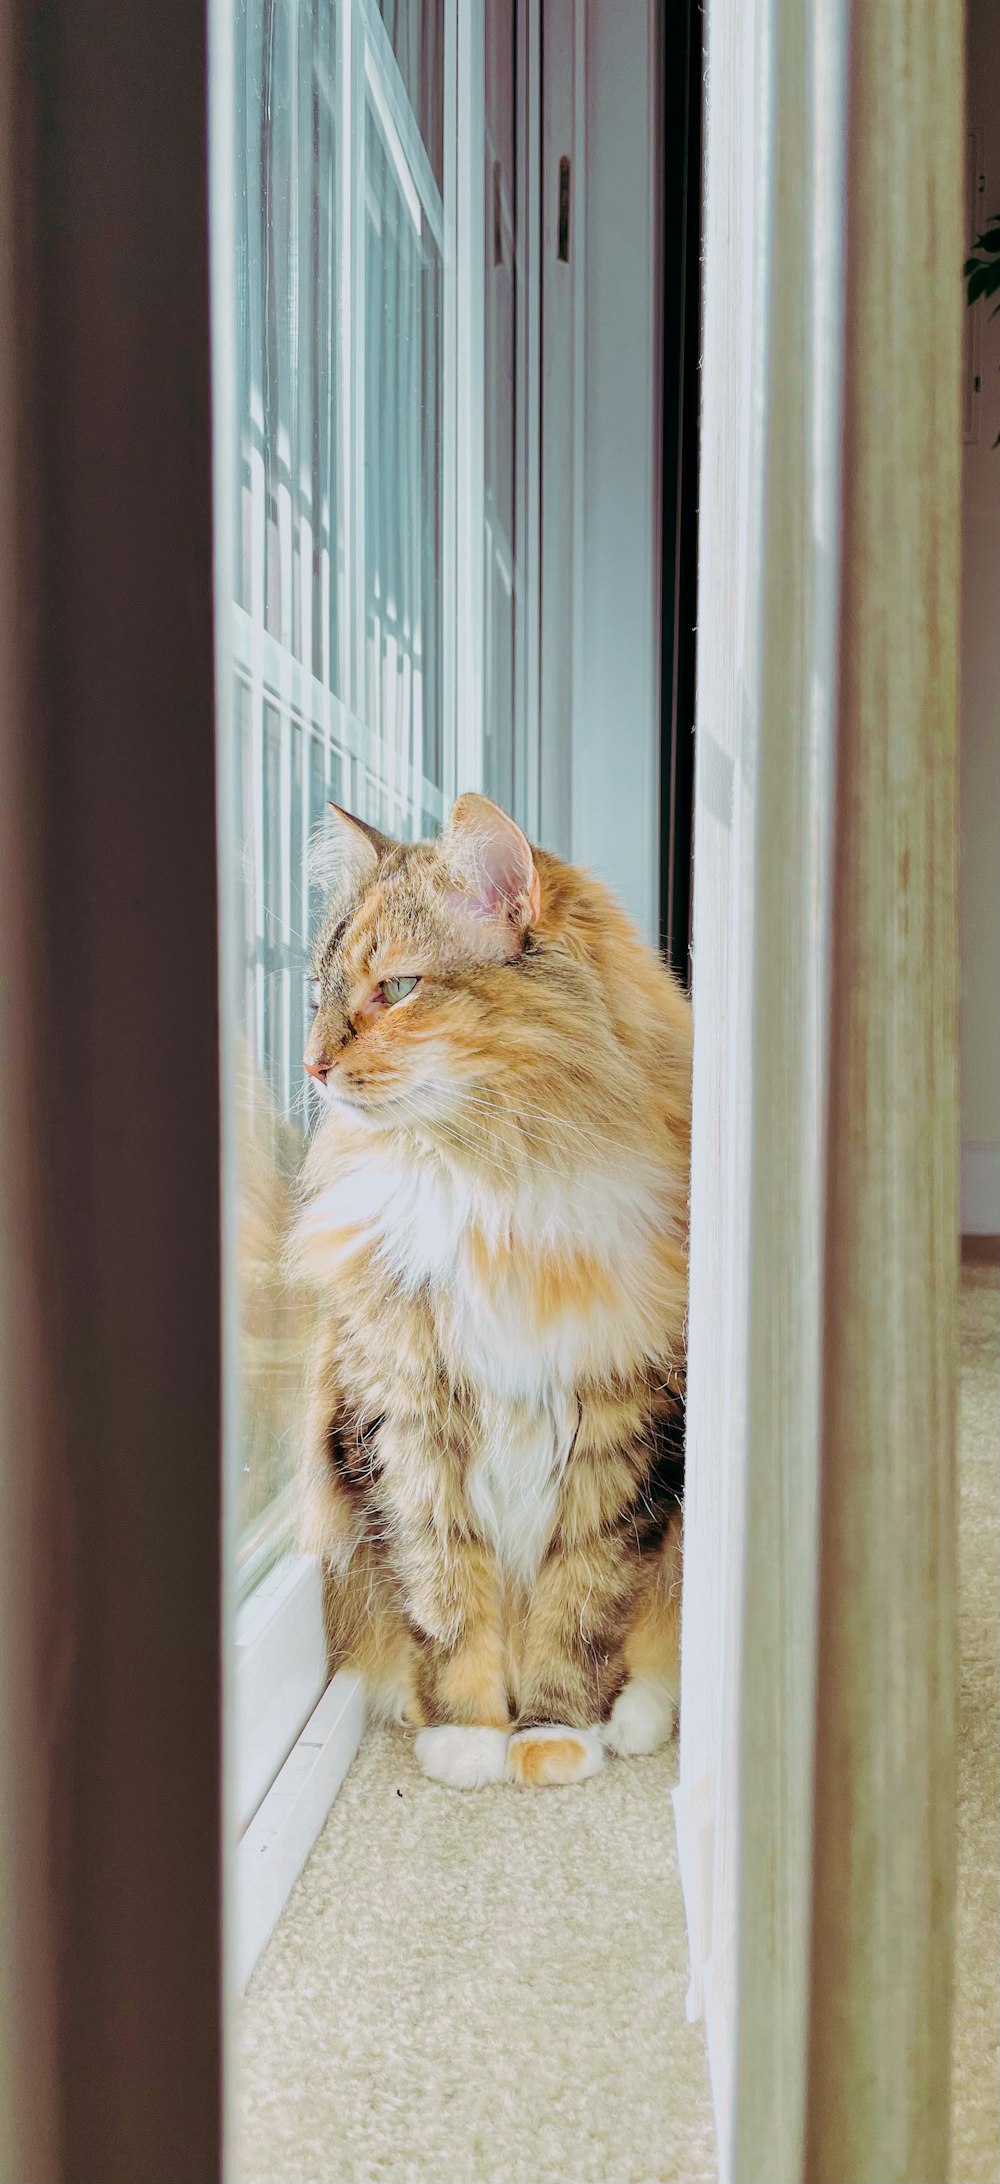 orange and white tabby cat on window